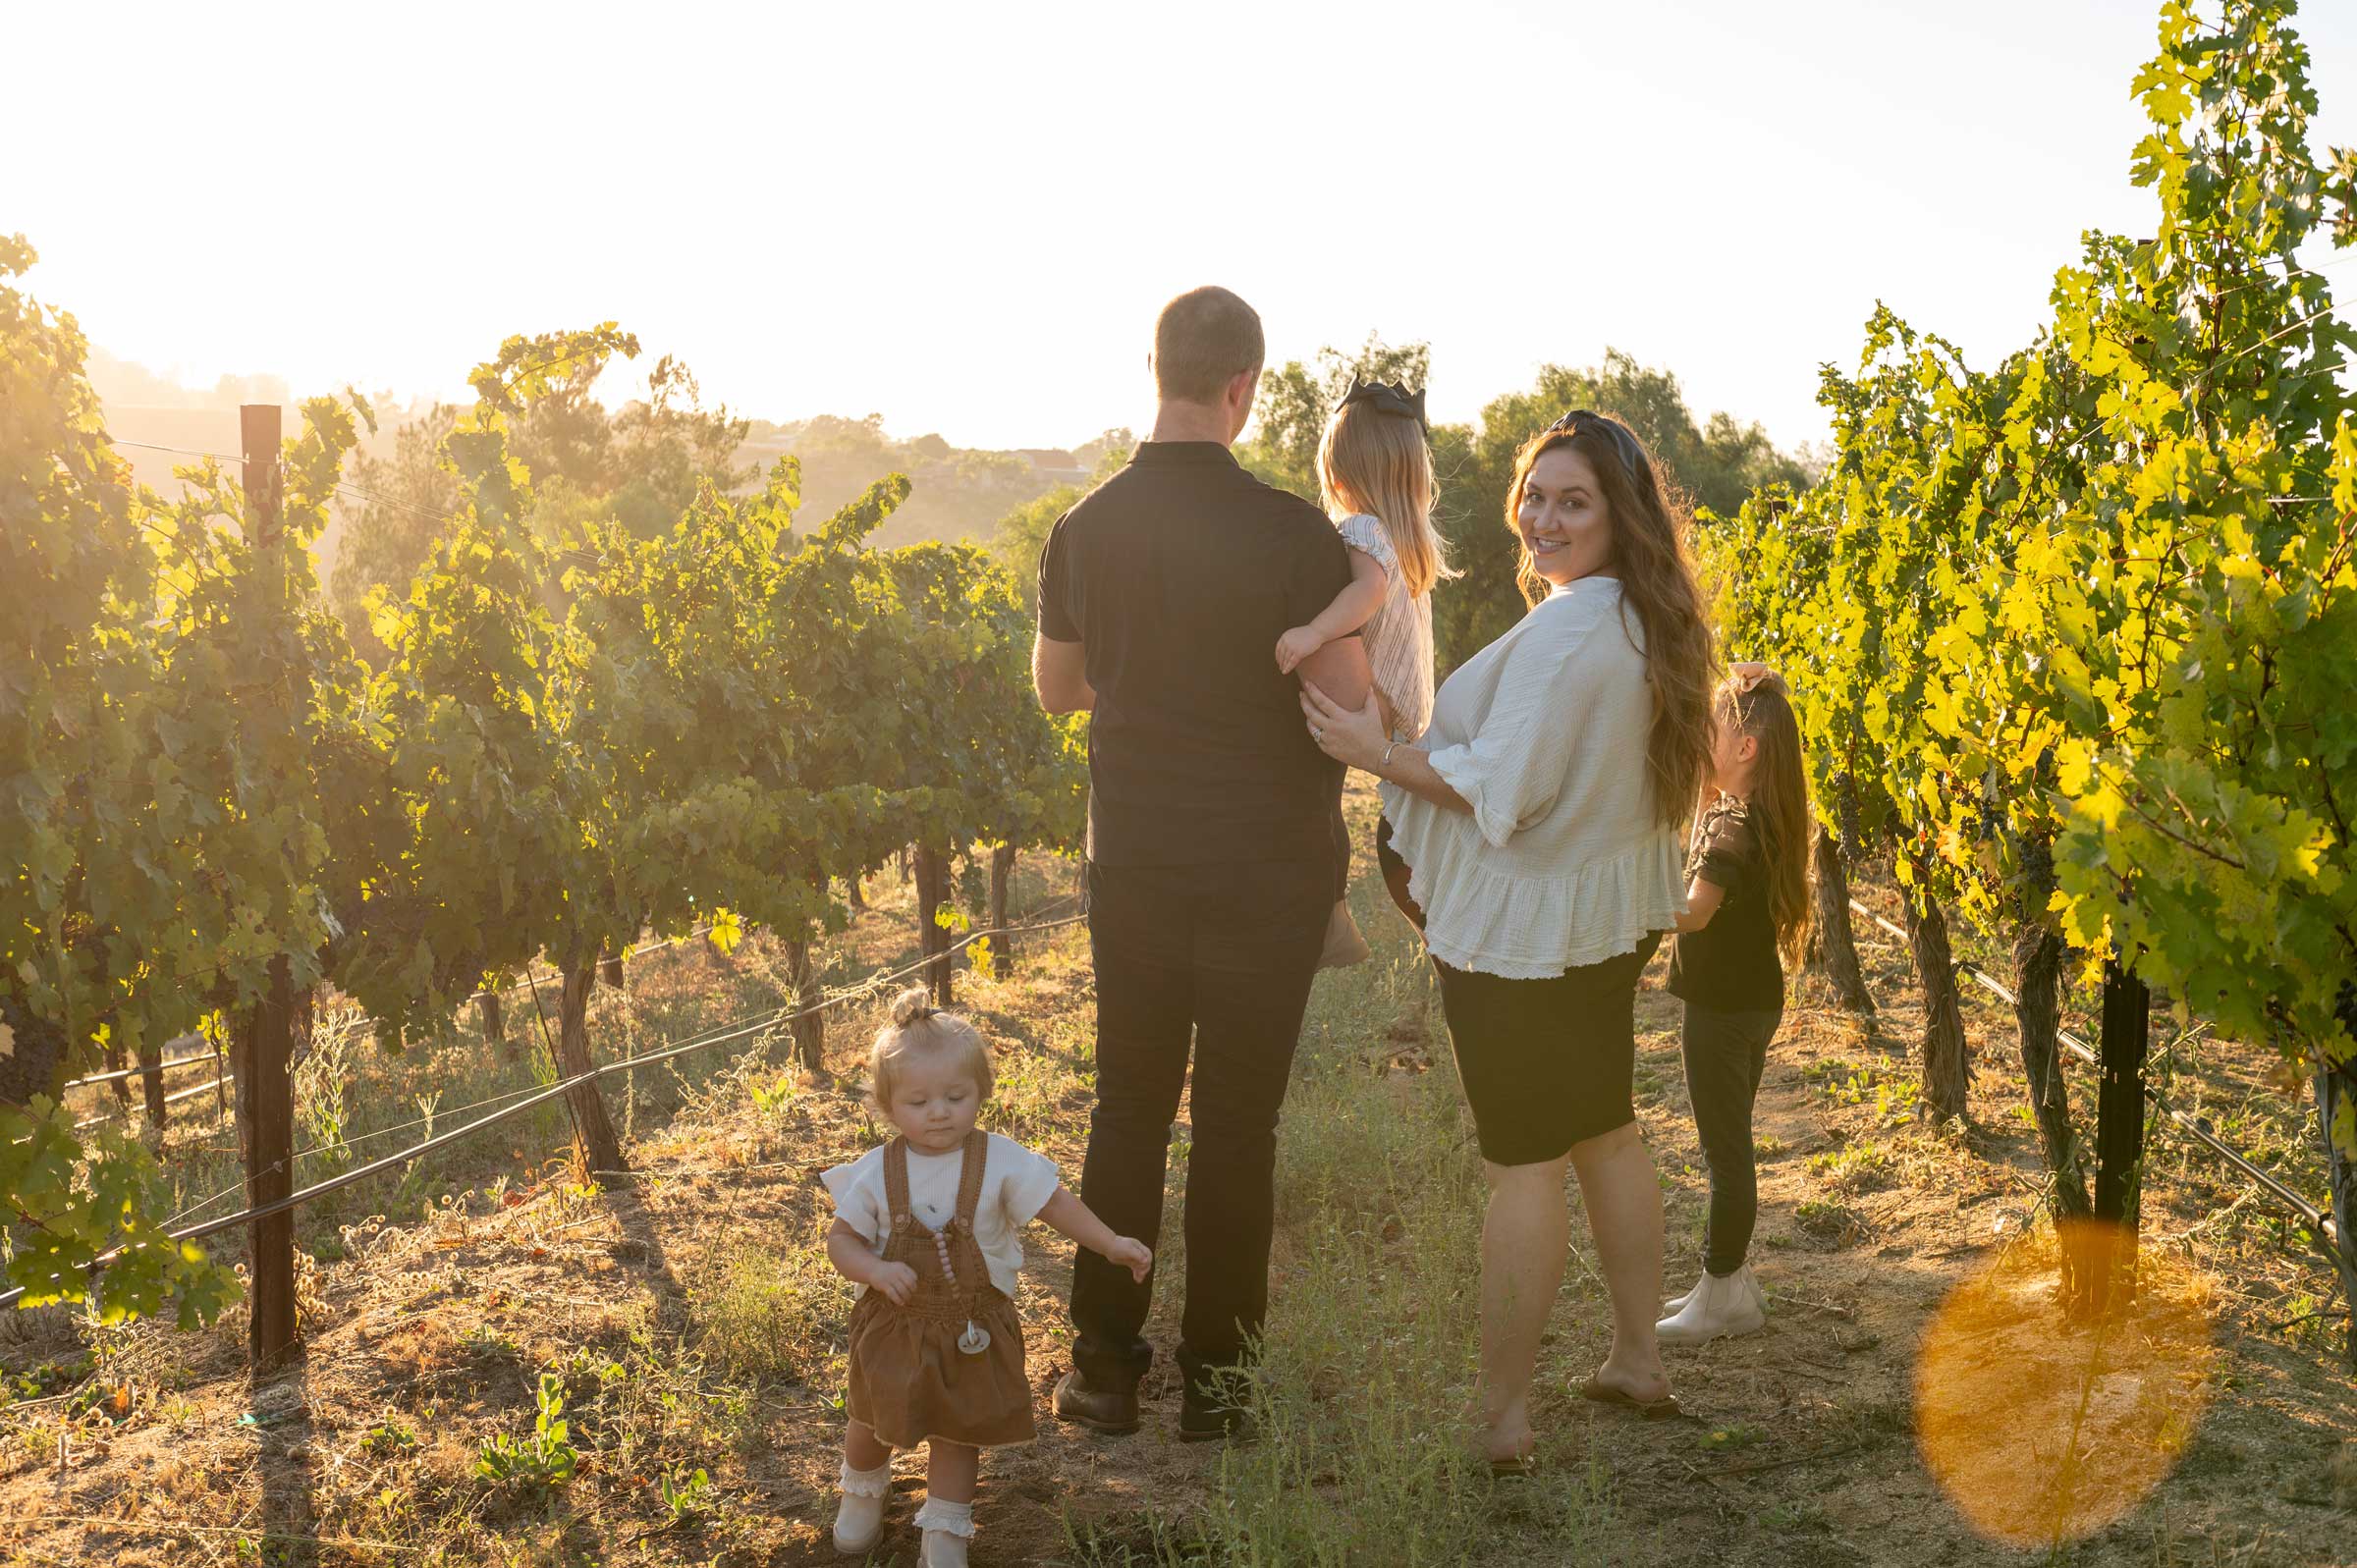 Alexa Navarro in the vineyard with her family